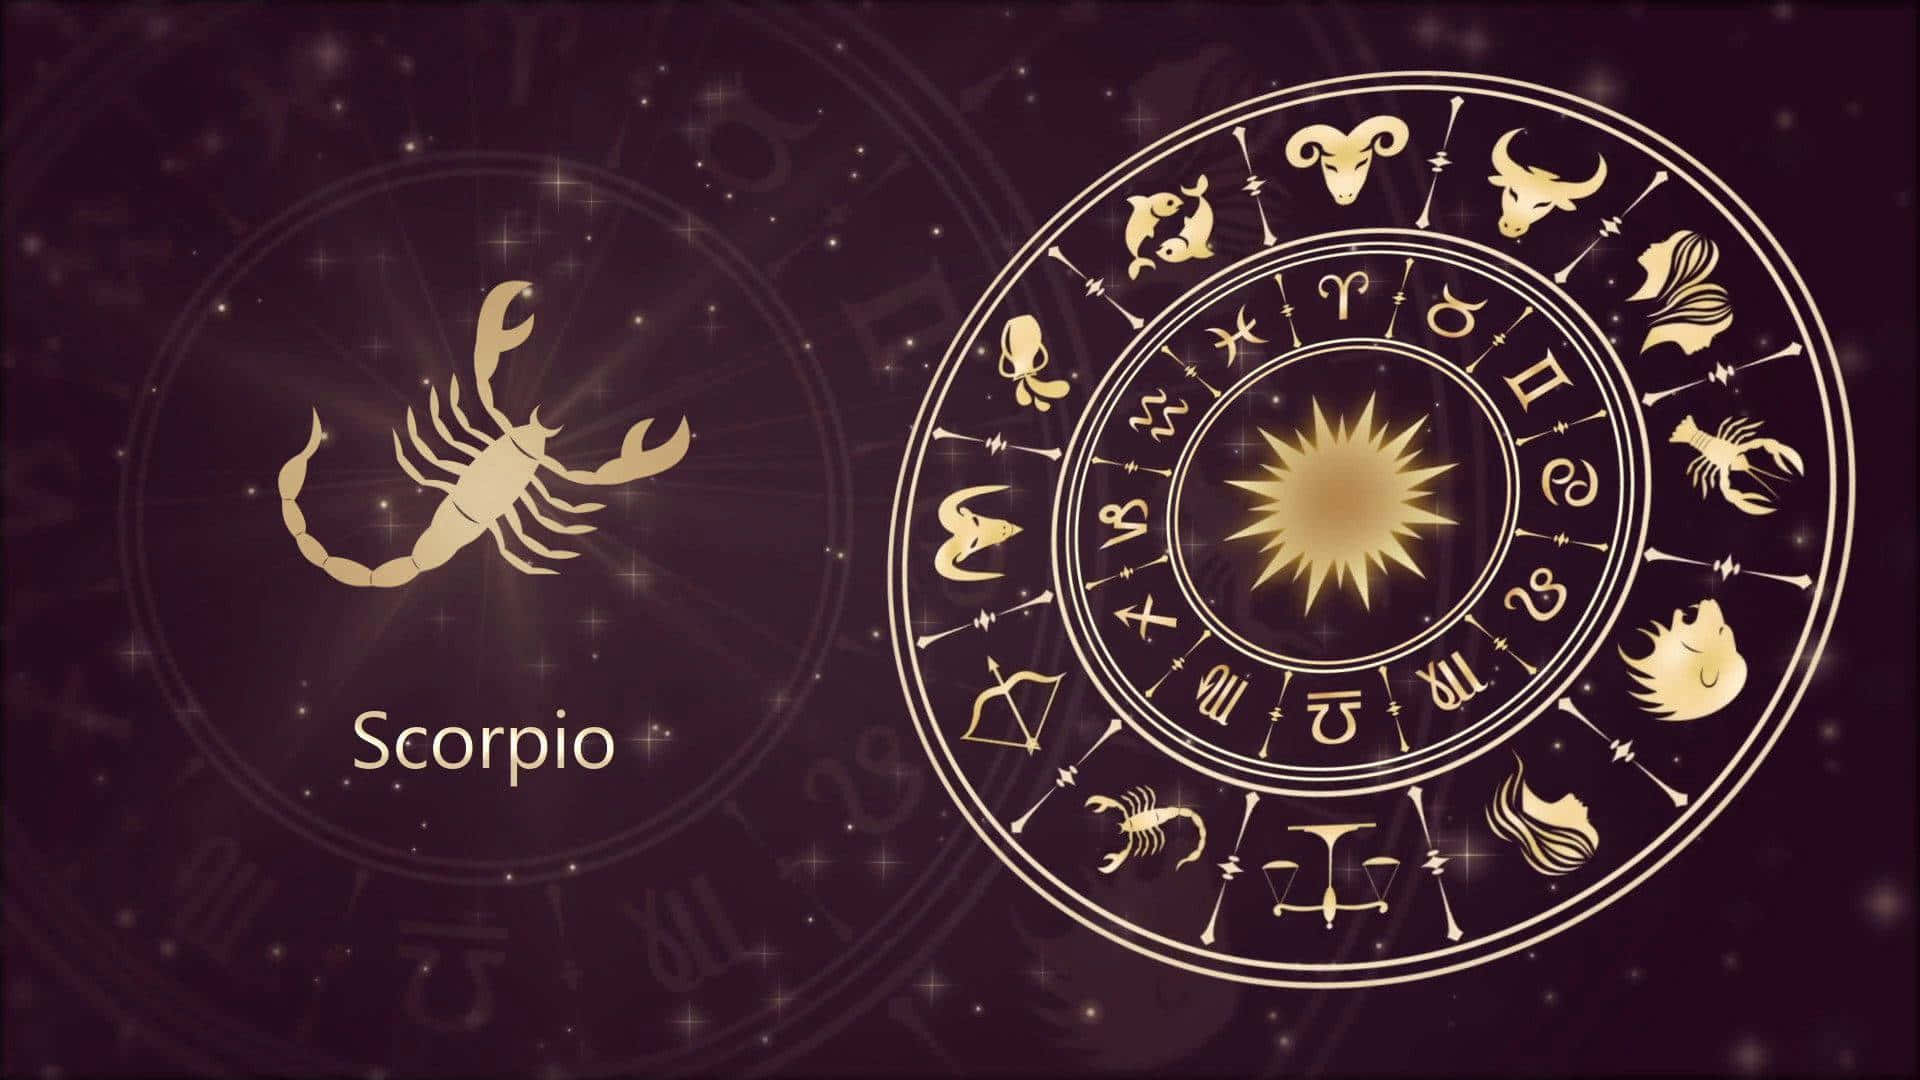 Free Scorpio Zodiac Wallpaper Downloads, [100+] Scorpio Zodiac Wallpapers  for FREE 